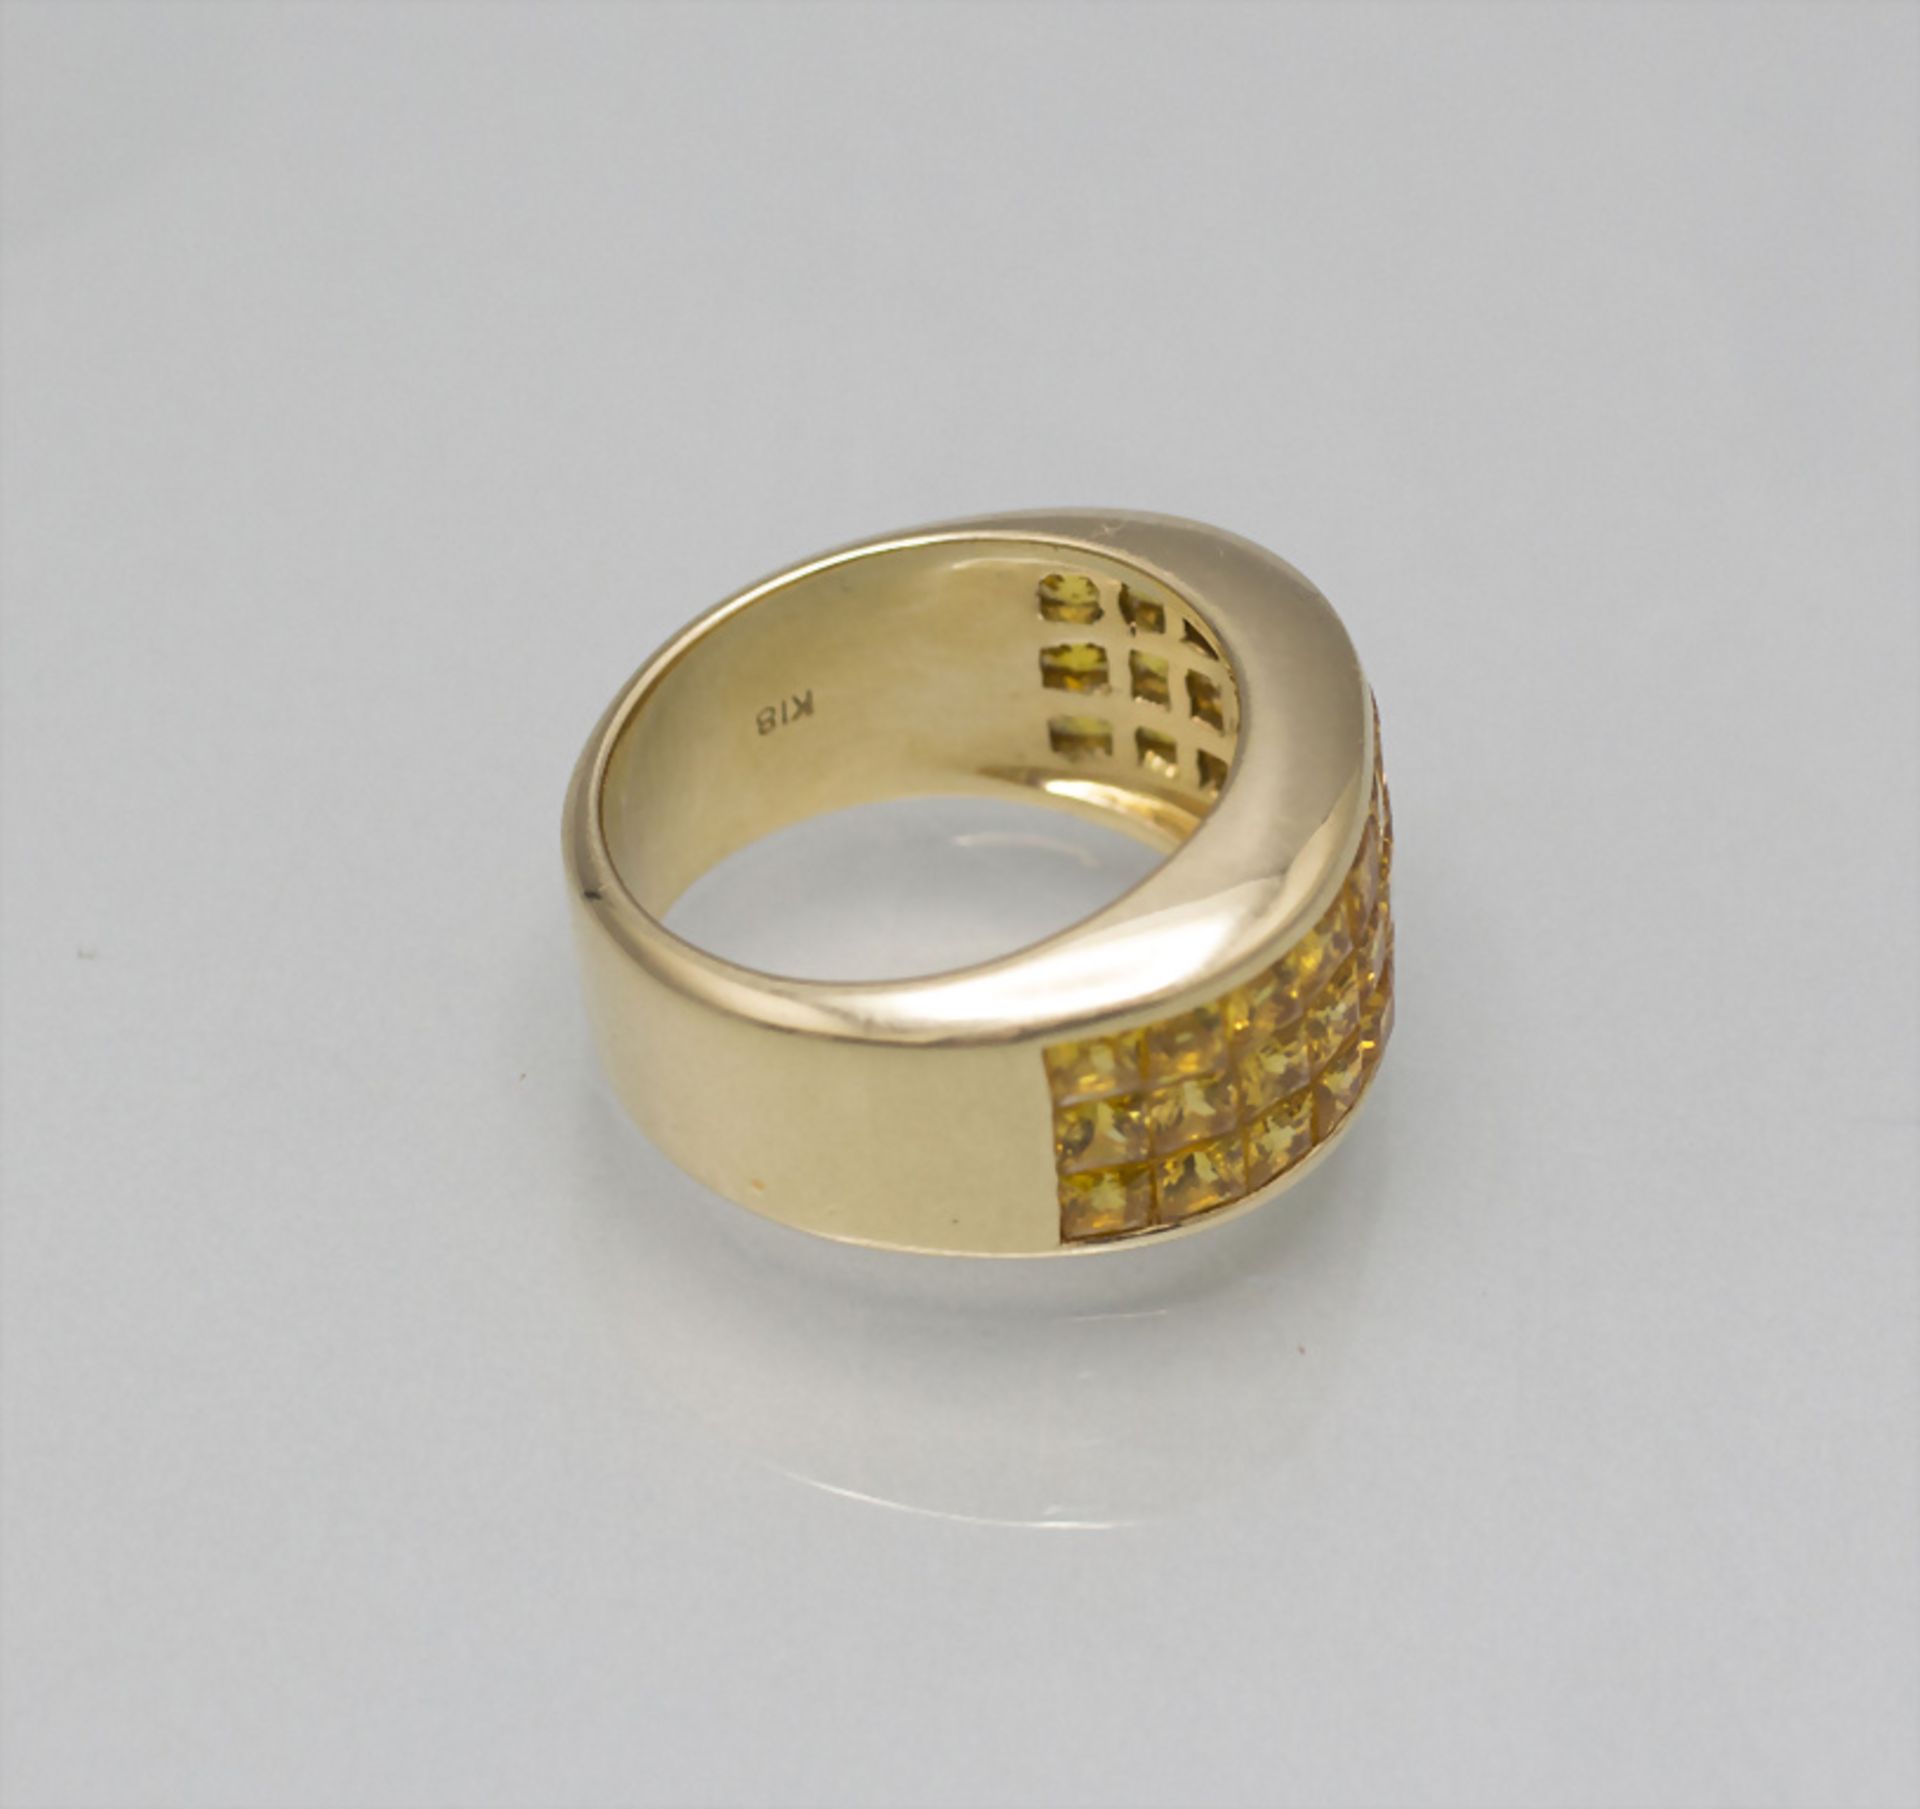 Damenring mit gelben Saphiren / A ladies 18 ct gold ring with yellow sapphires - Image 2 of 2